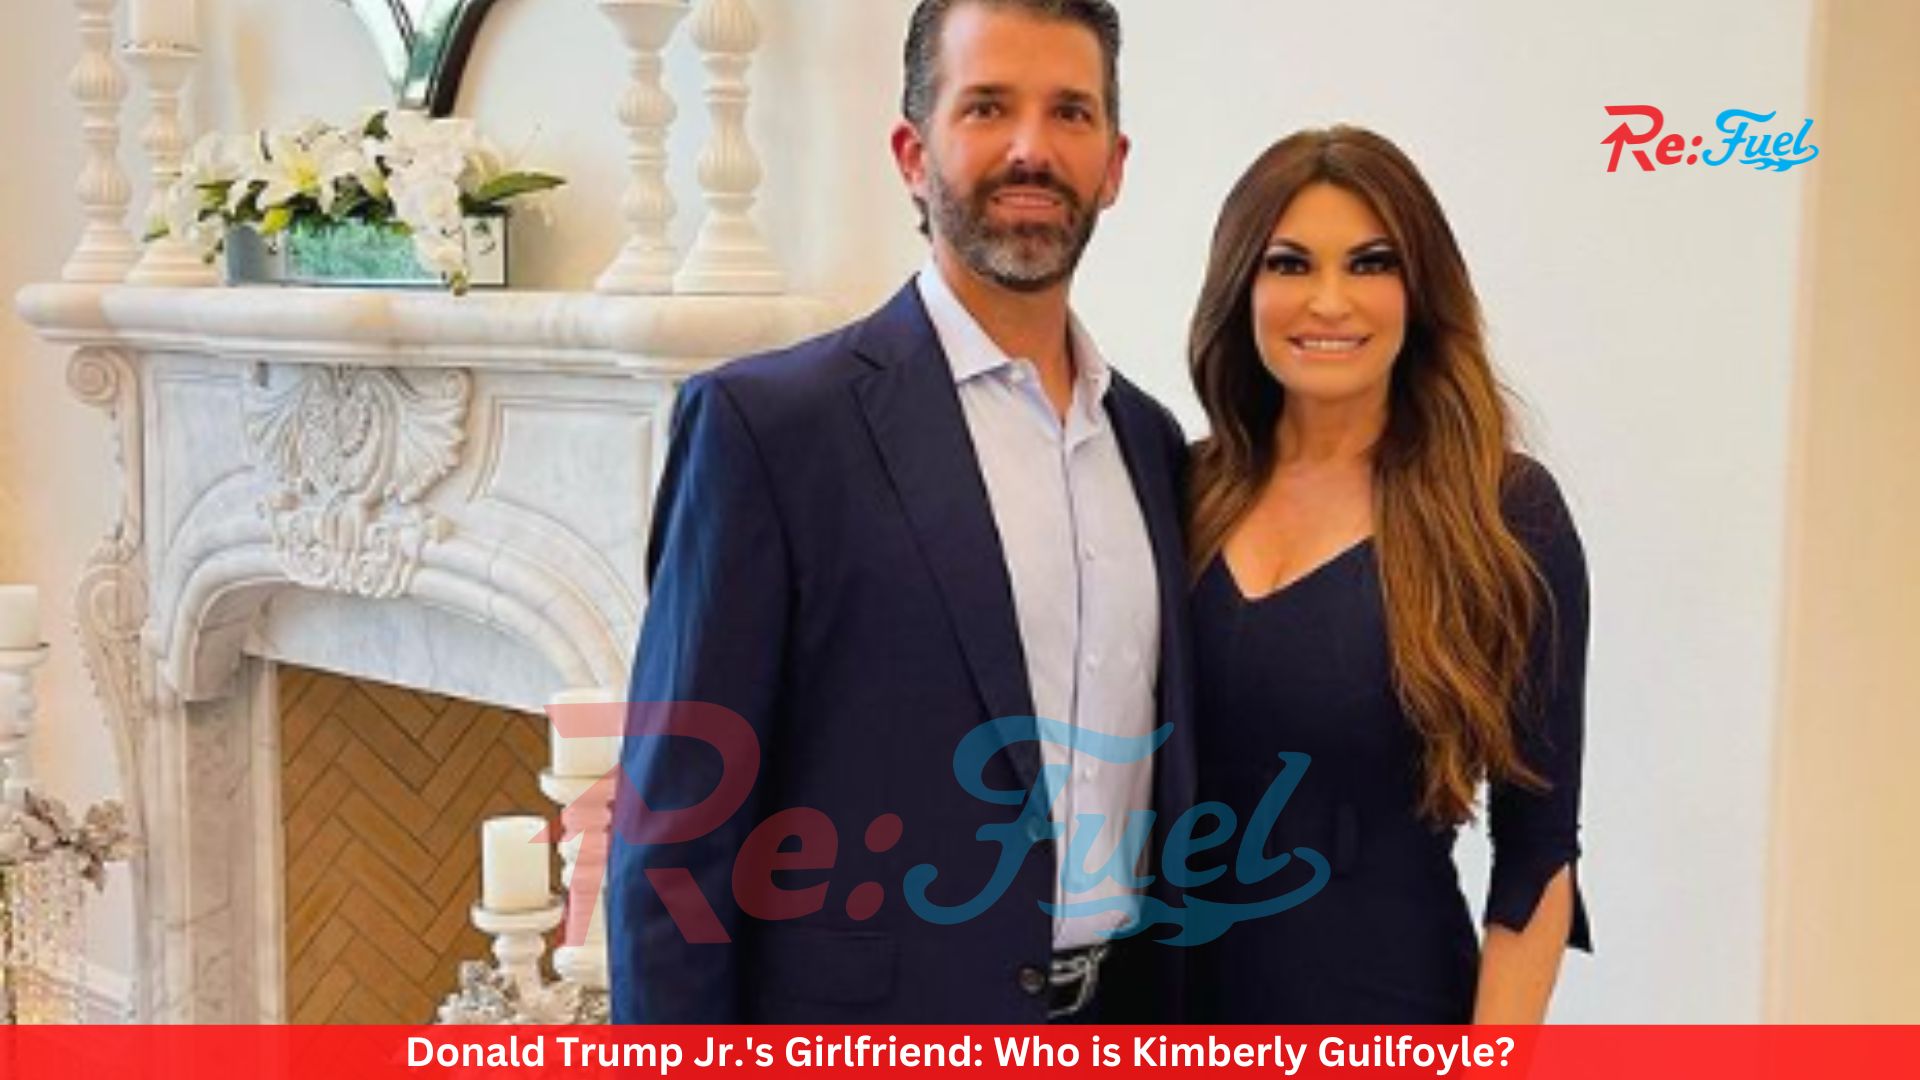 Donald Trump Jr.'s Girlfriend: Who is Kimberly Guilfoyle?